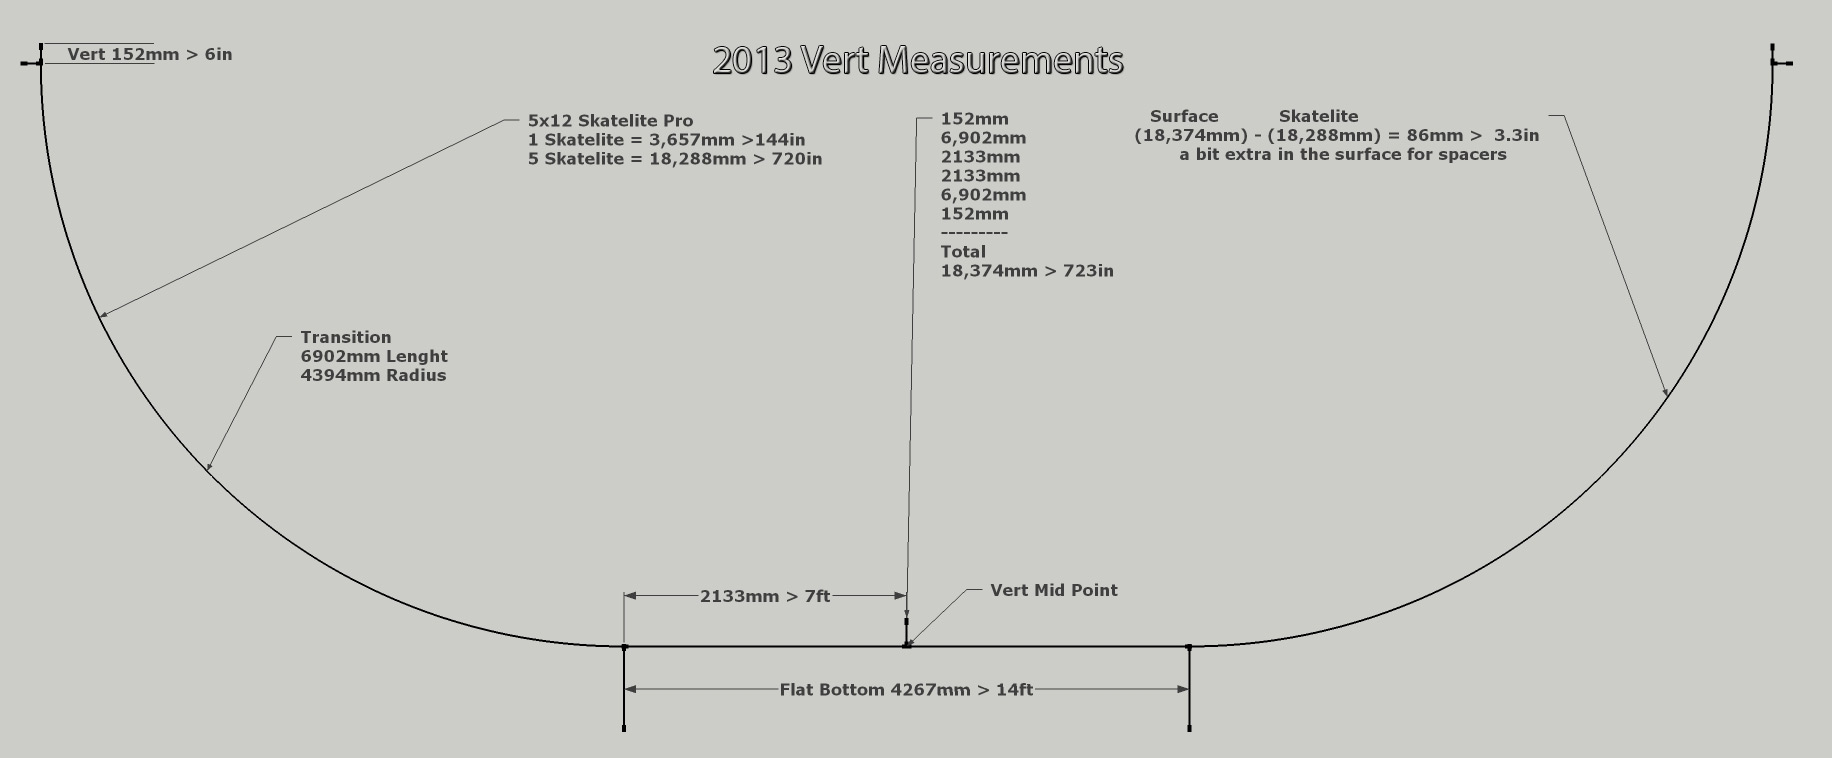 Vert_ramp_measurements.jpg